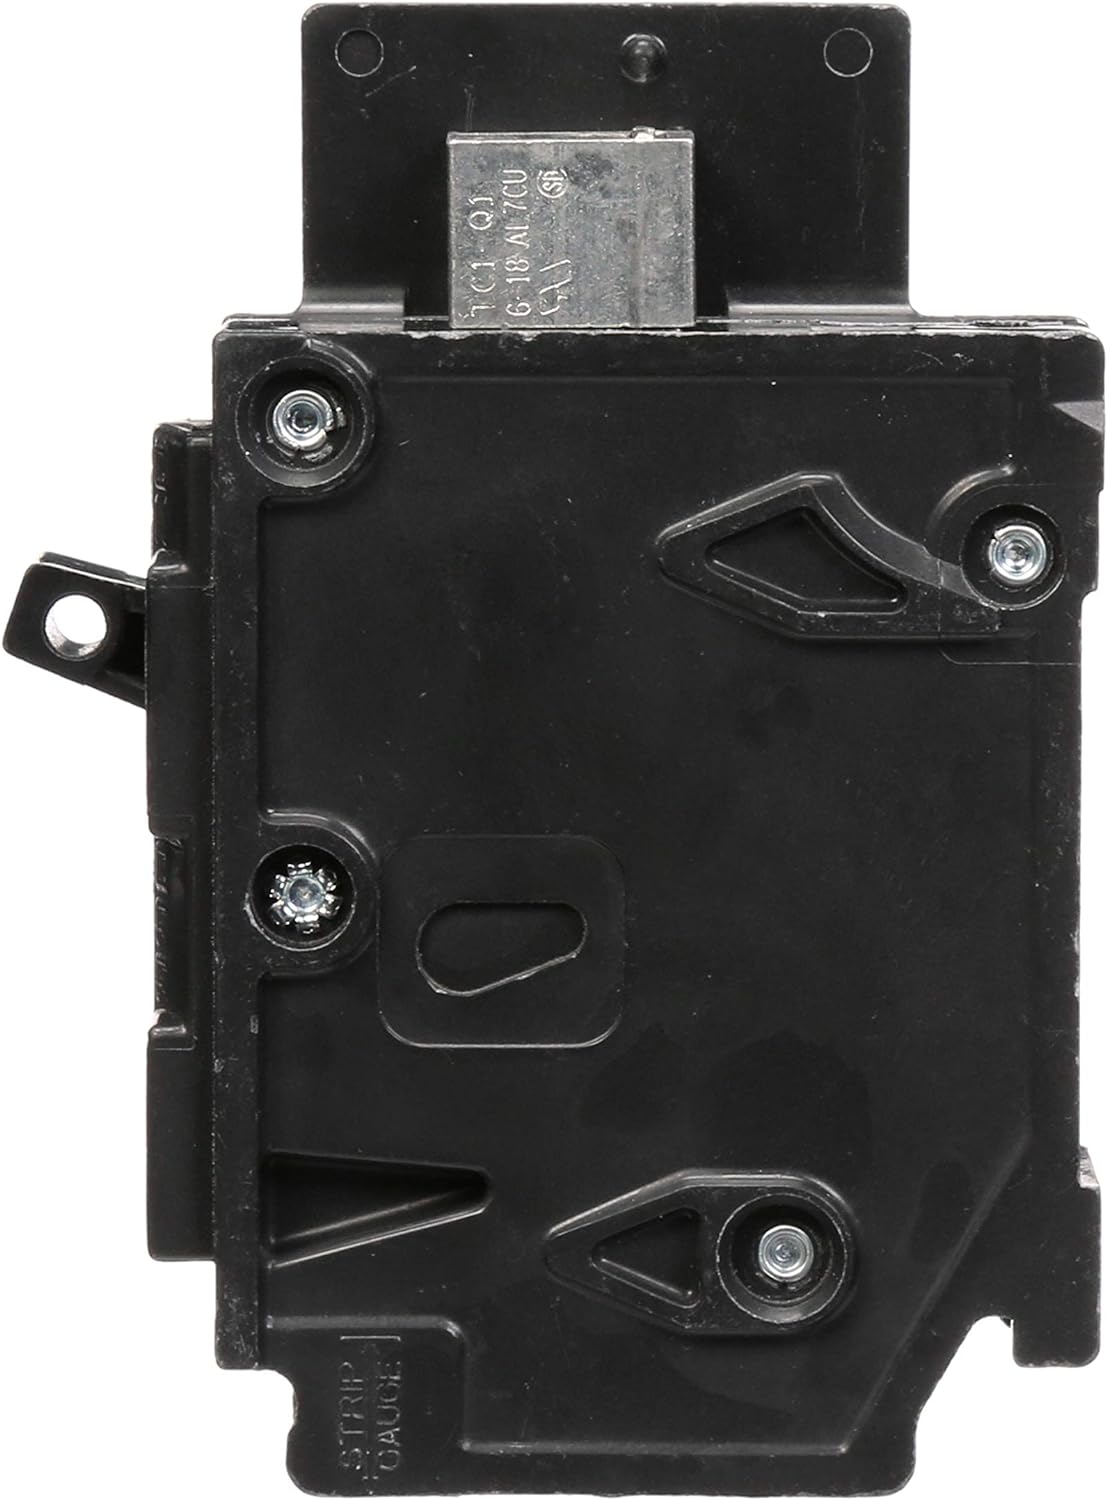 BQ1B020H - Siemens - 20 Amp Molded Case Circuit Breaker